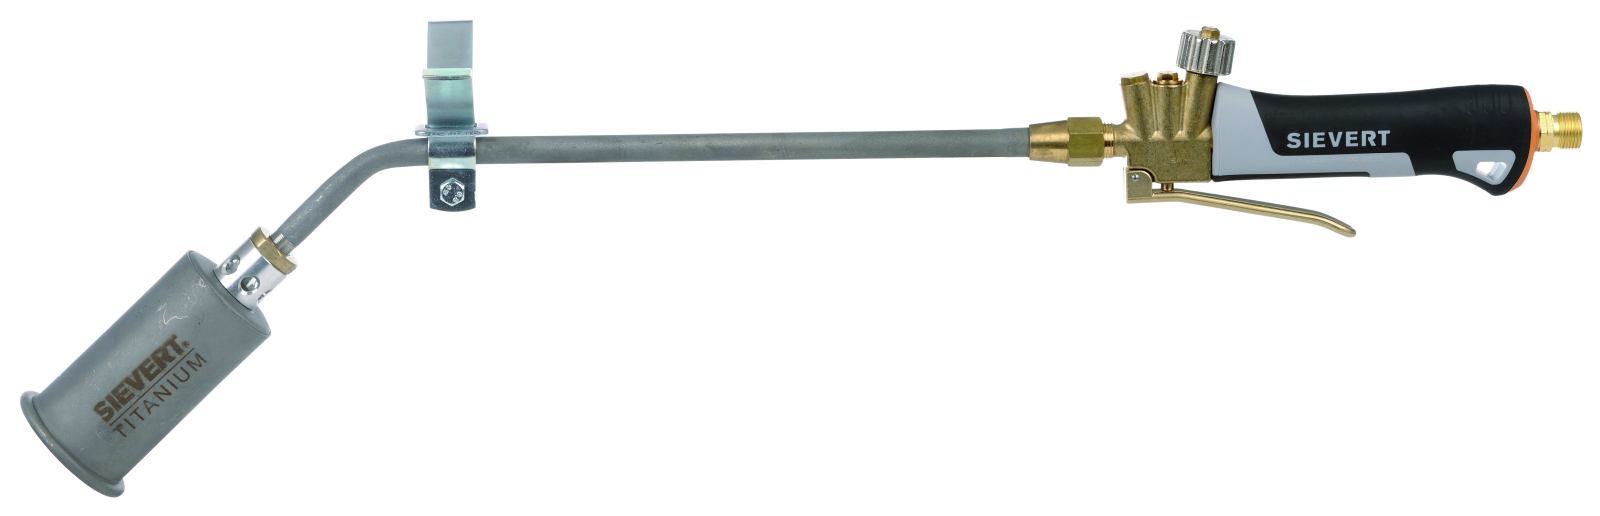 Titan Handbrenner PRO 88 - 65 cm 50 mm Becher 86 kw